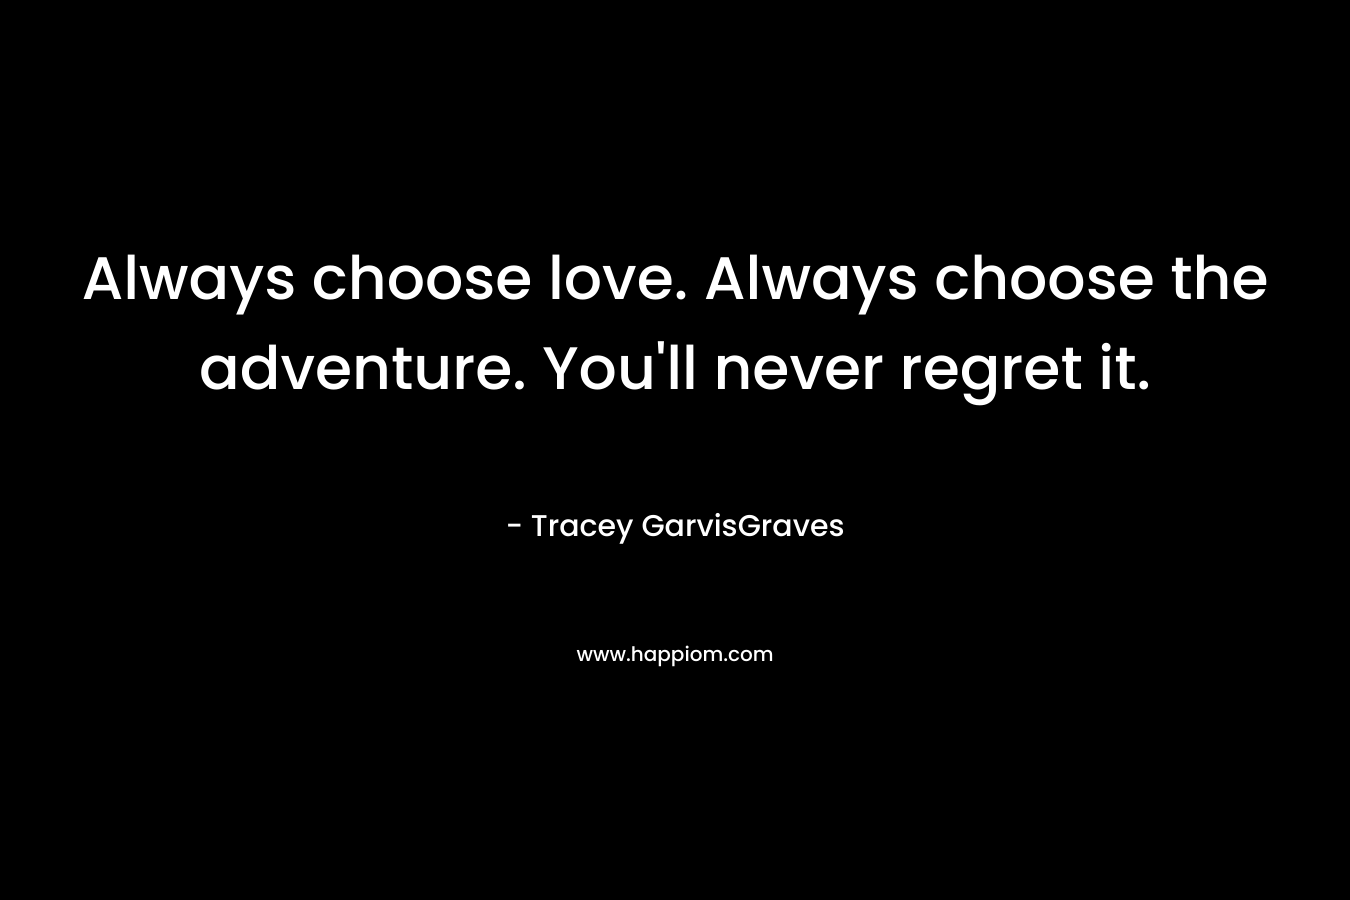 Always choose love. Always choose the adventure. You'll never regret it.